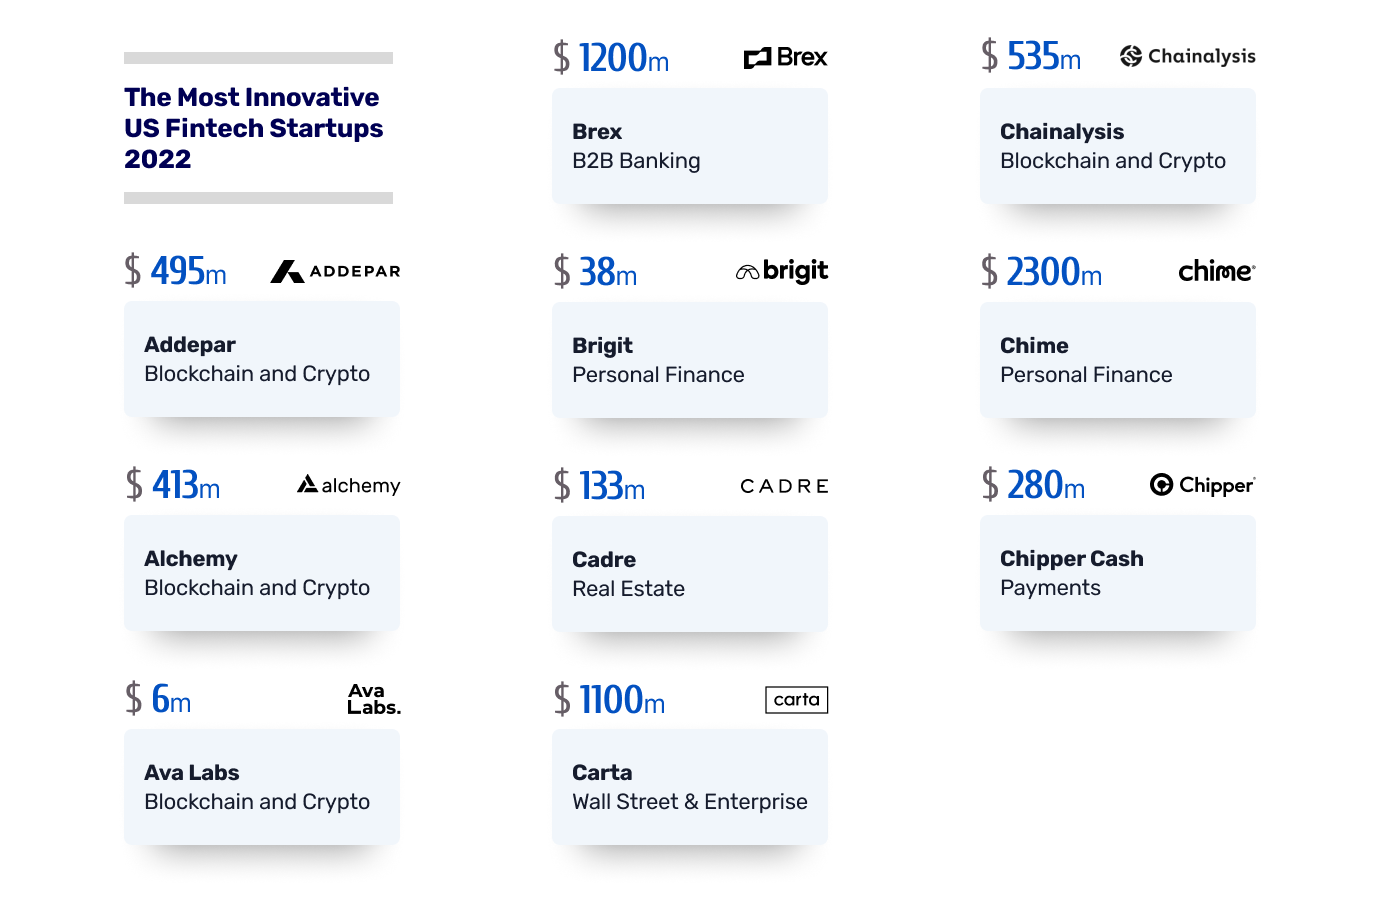 The Most Innovative US Fintech Startups 2022